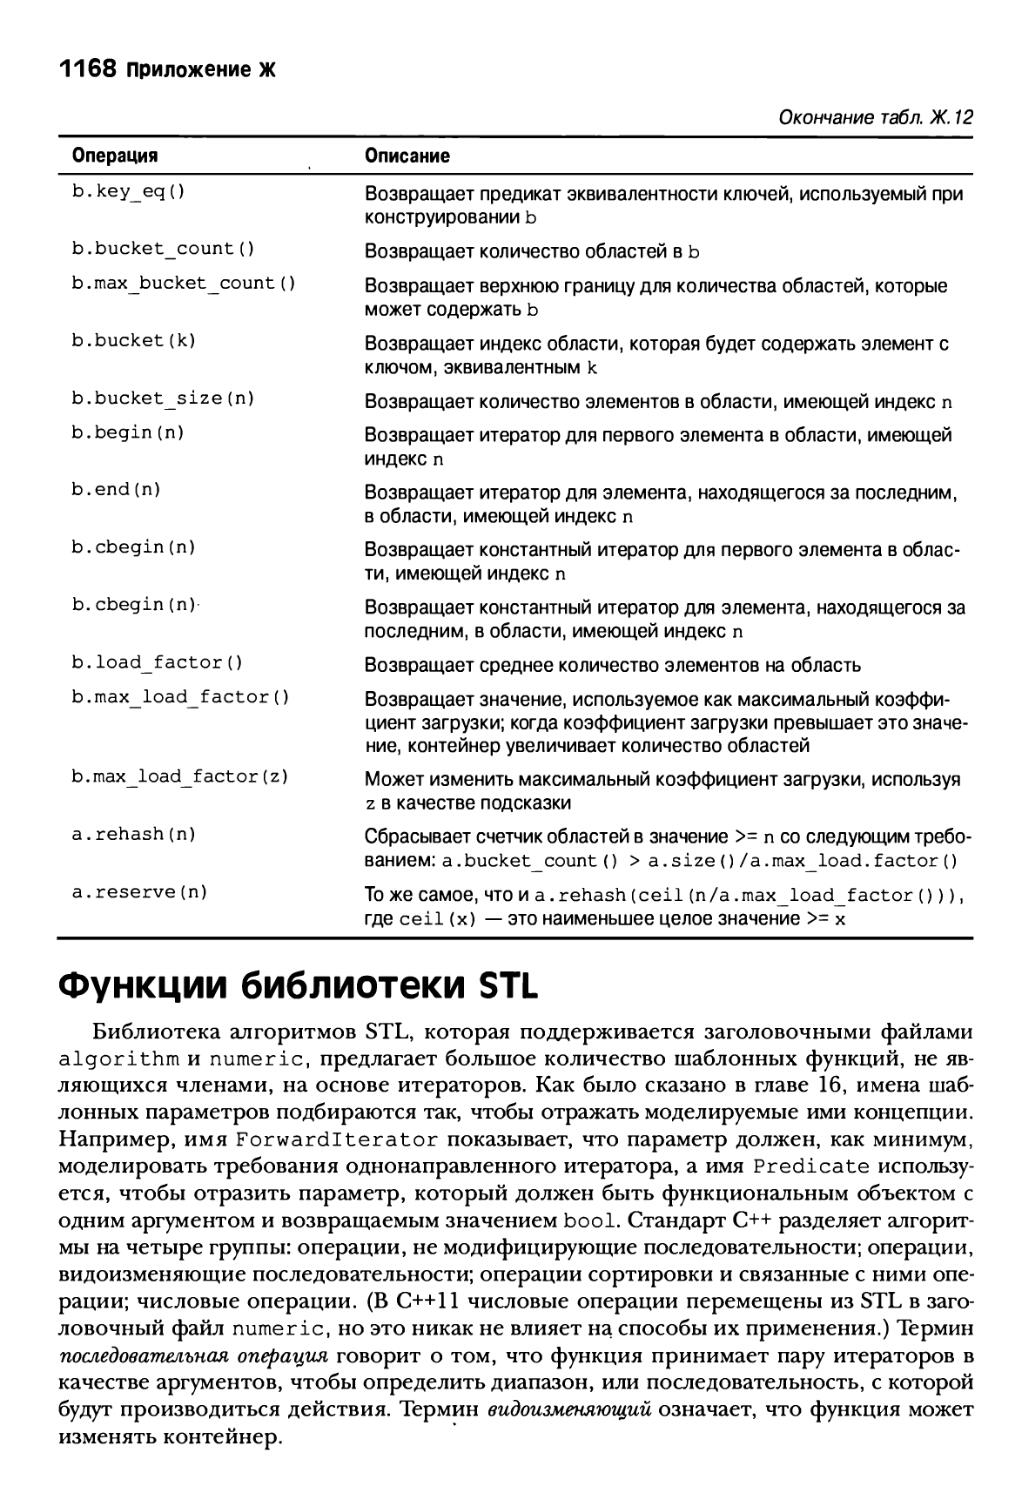 Функции библиотеки STL